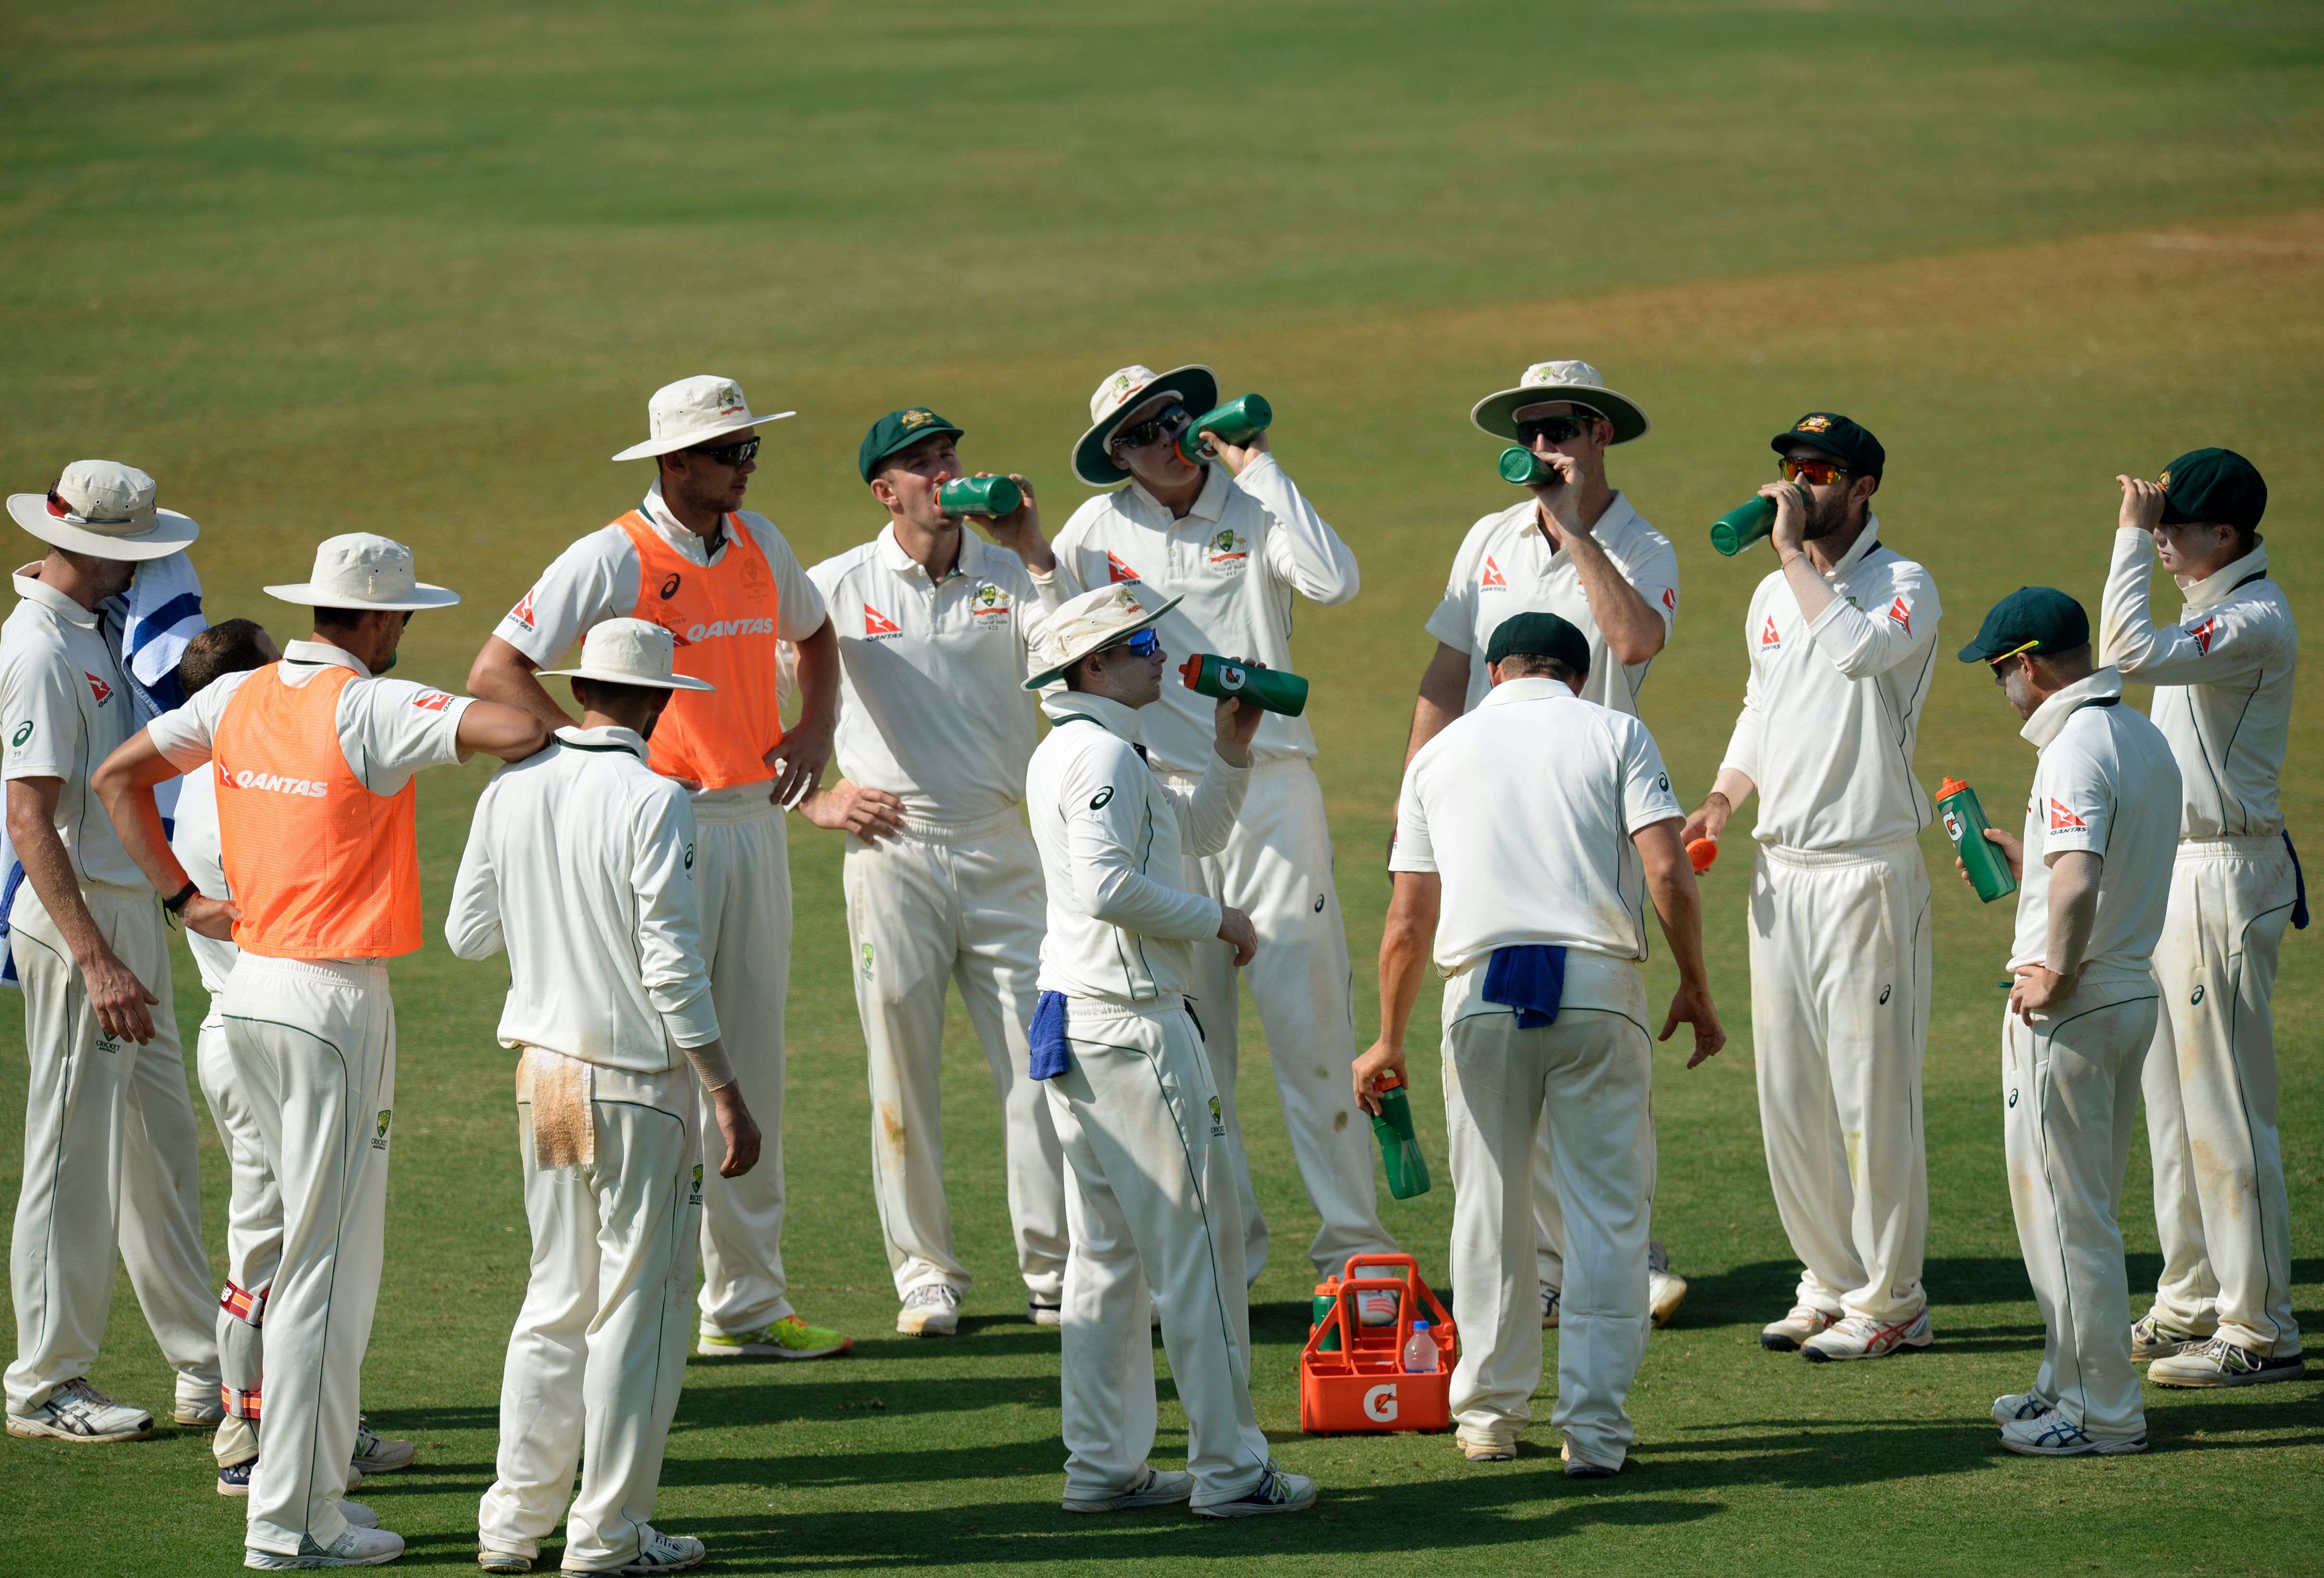 Live Cricket Score: India A vs Australia, Warm-up Match from Mumbai